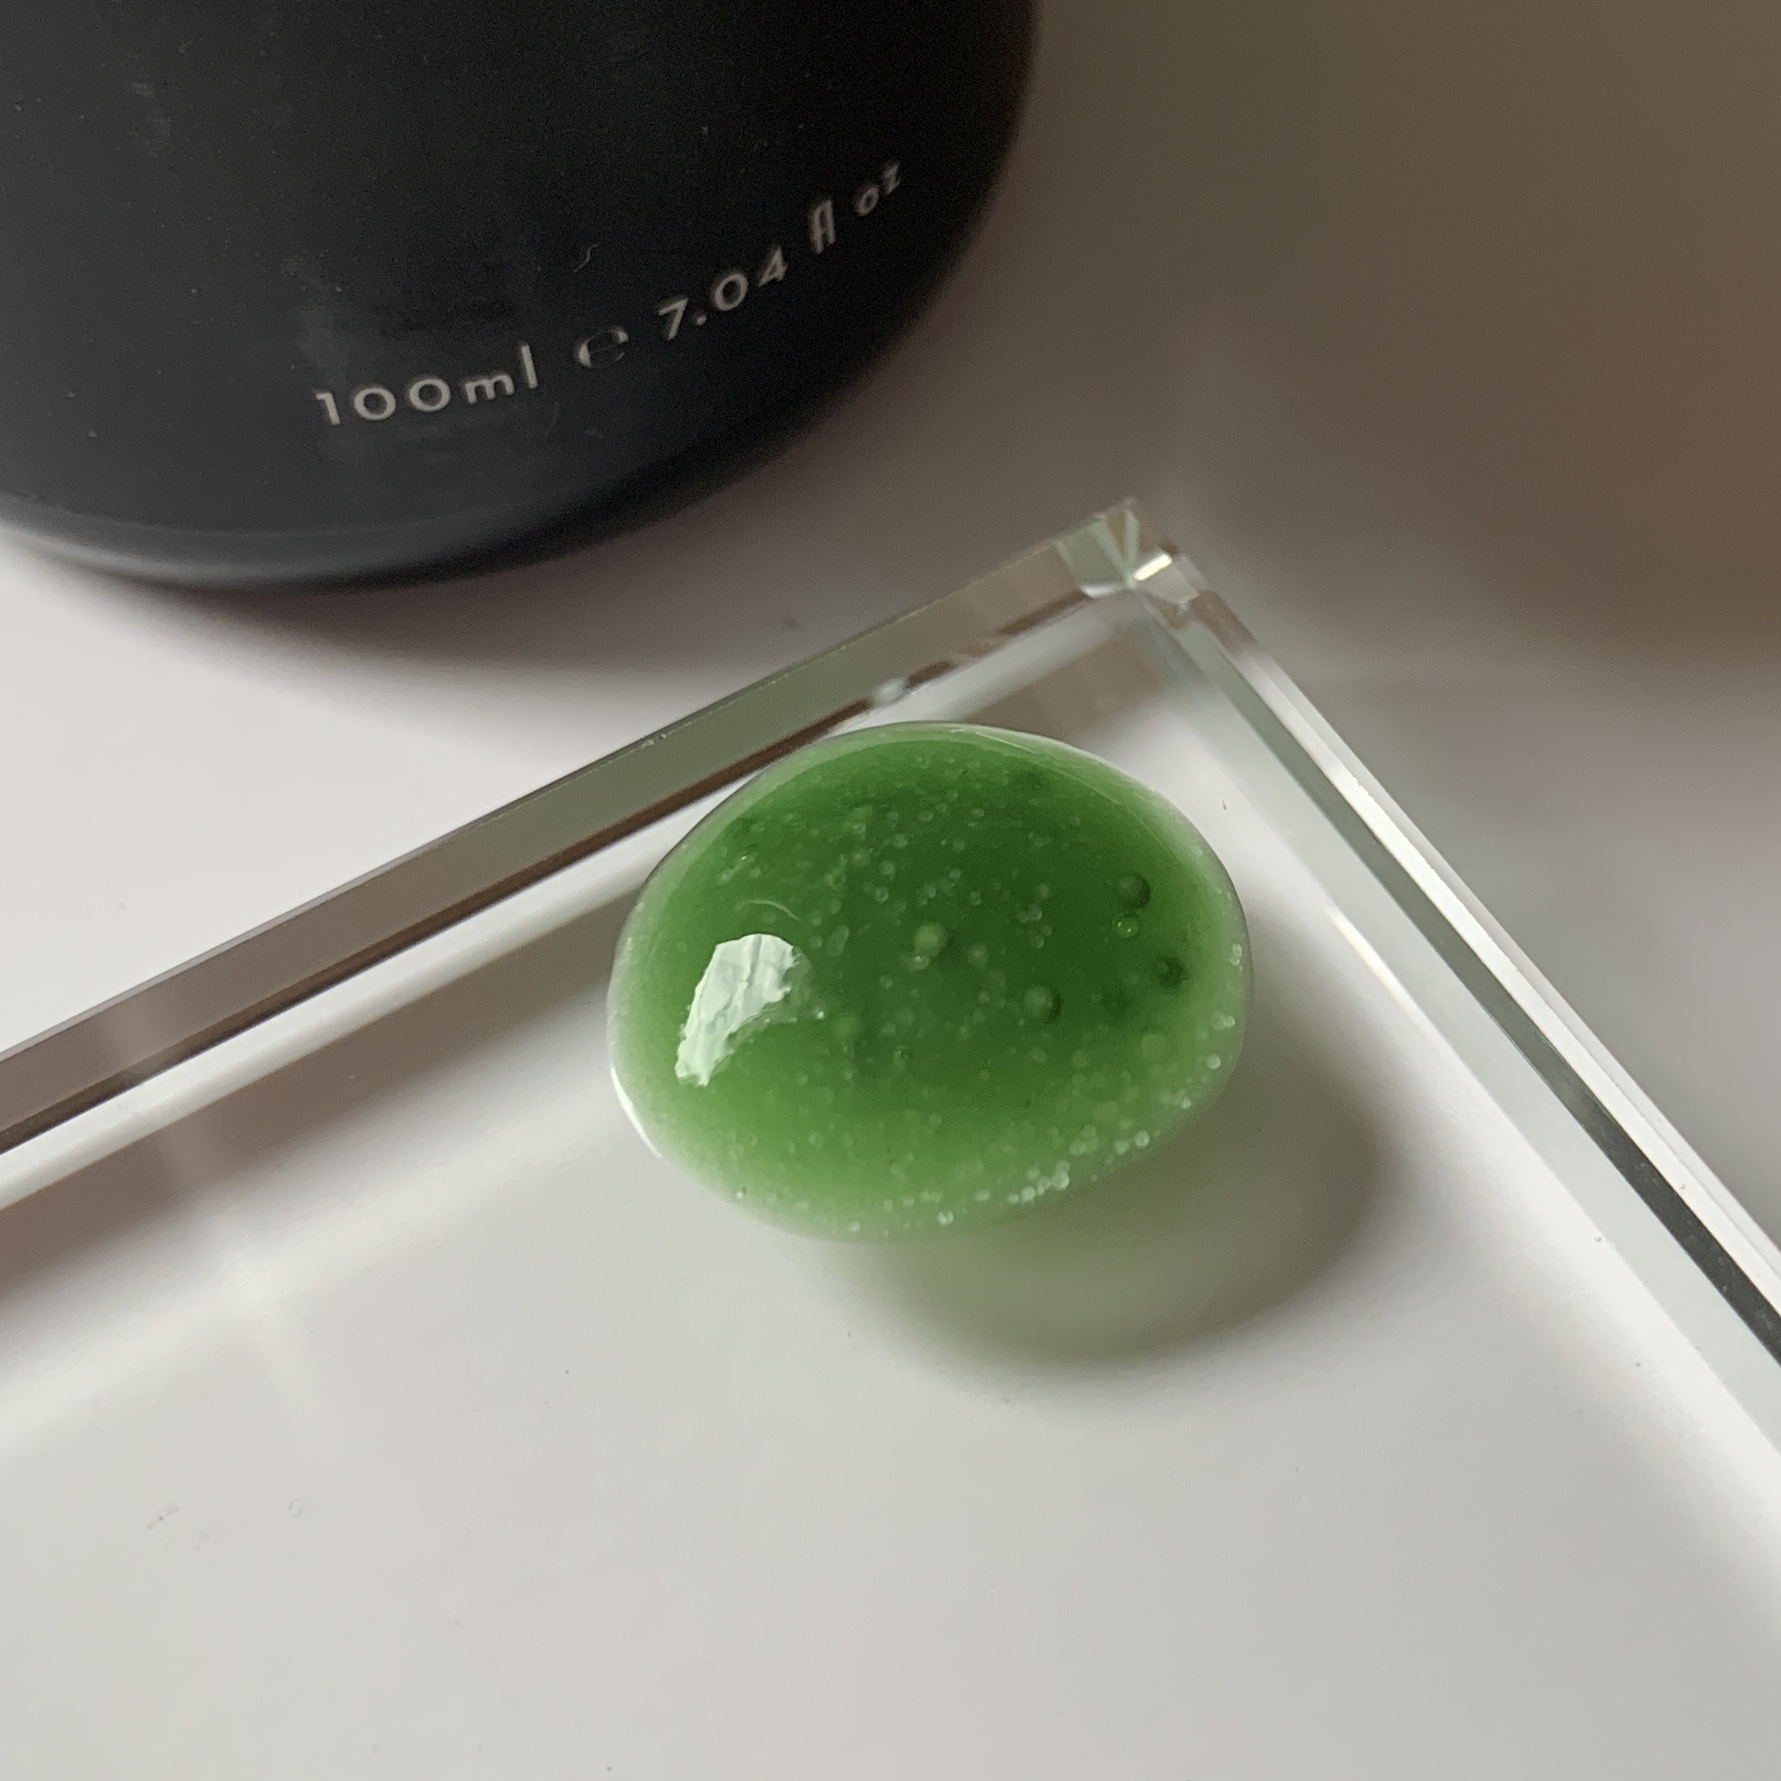 swatch of Mukti Organics 2 in 1 Resurfacing Exfoliant on glass